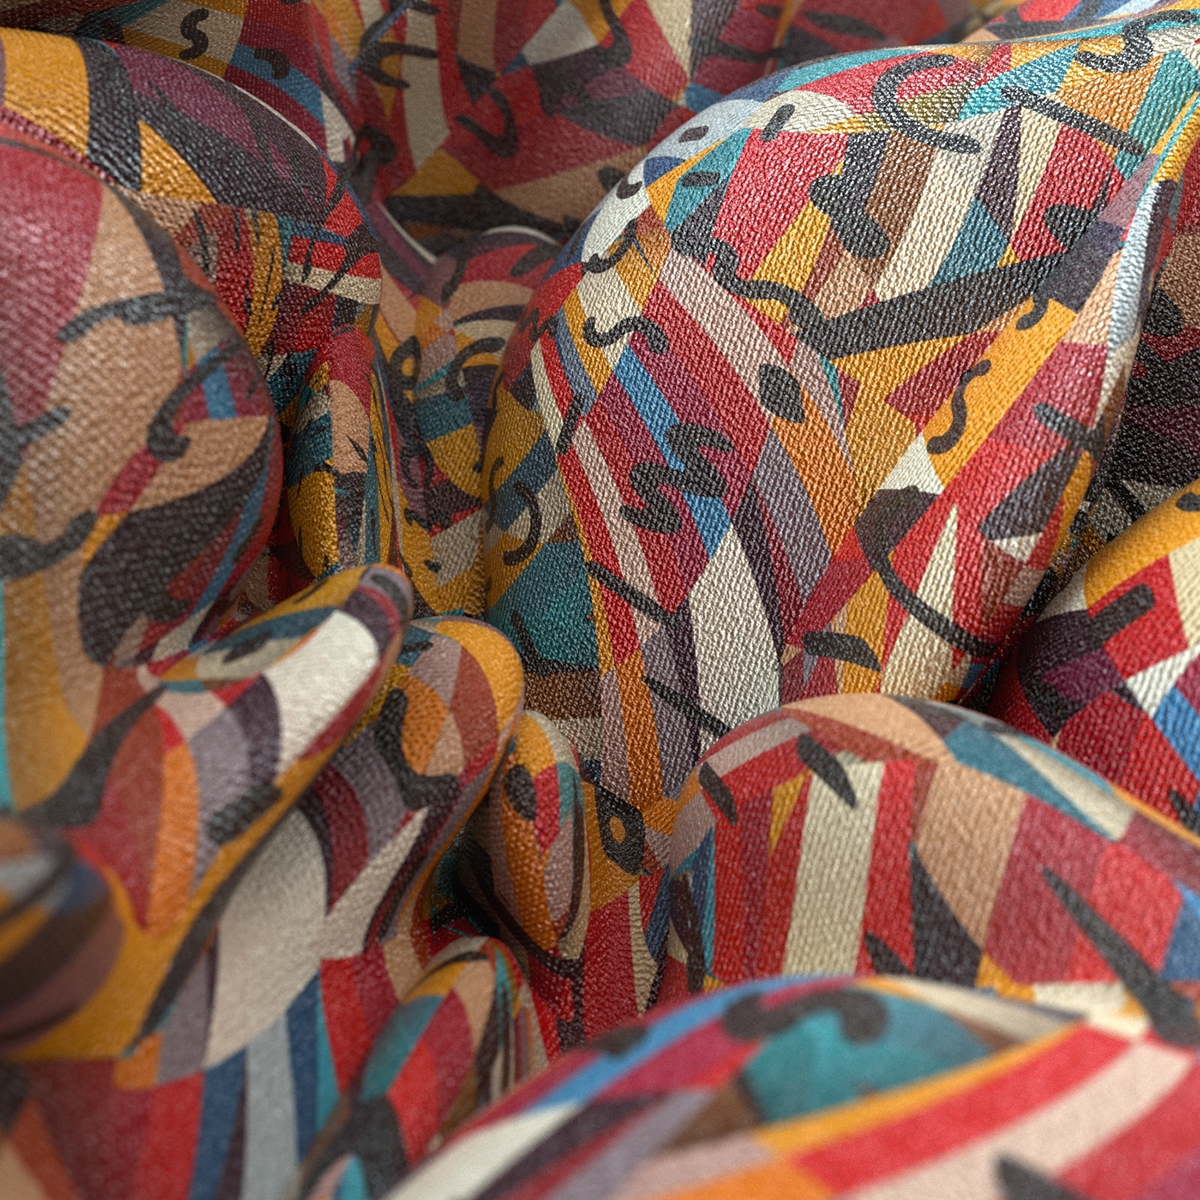 textile background voronoid surface iridescent Fashion  rubber